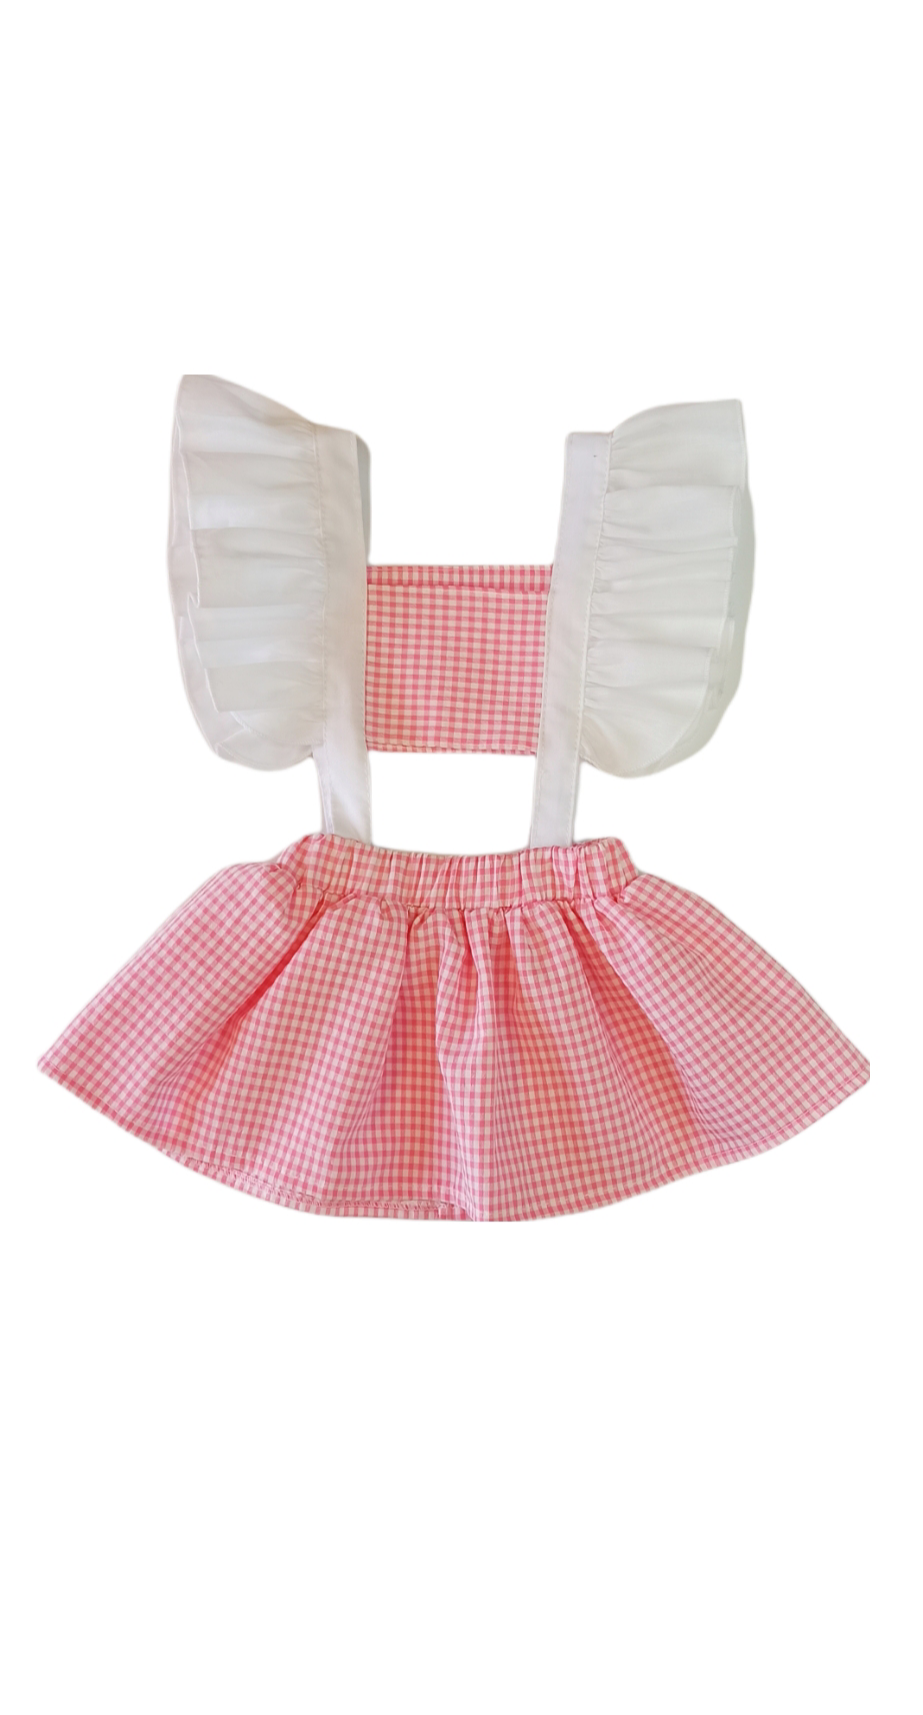 Sweet baby βρεφικό σετ top & φούστα με τιράντες λευκό/ροζ καρό